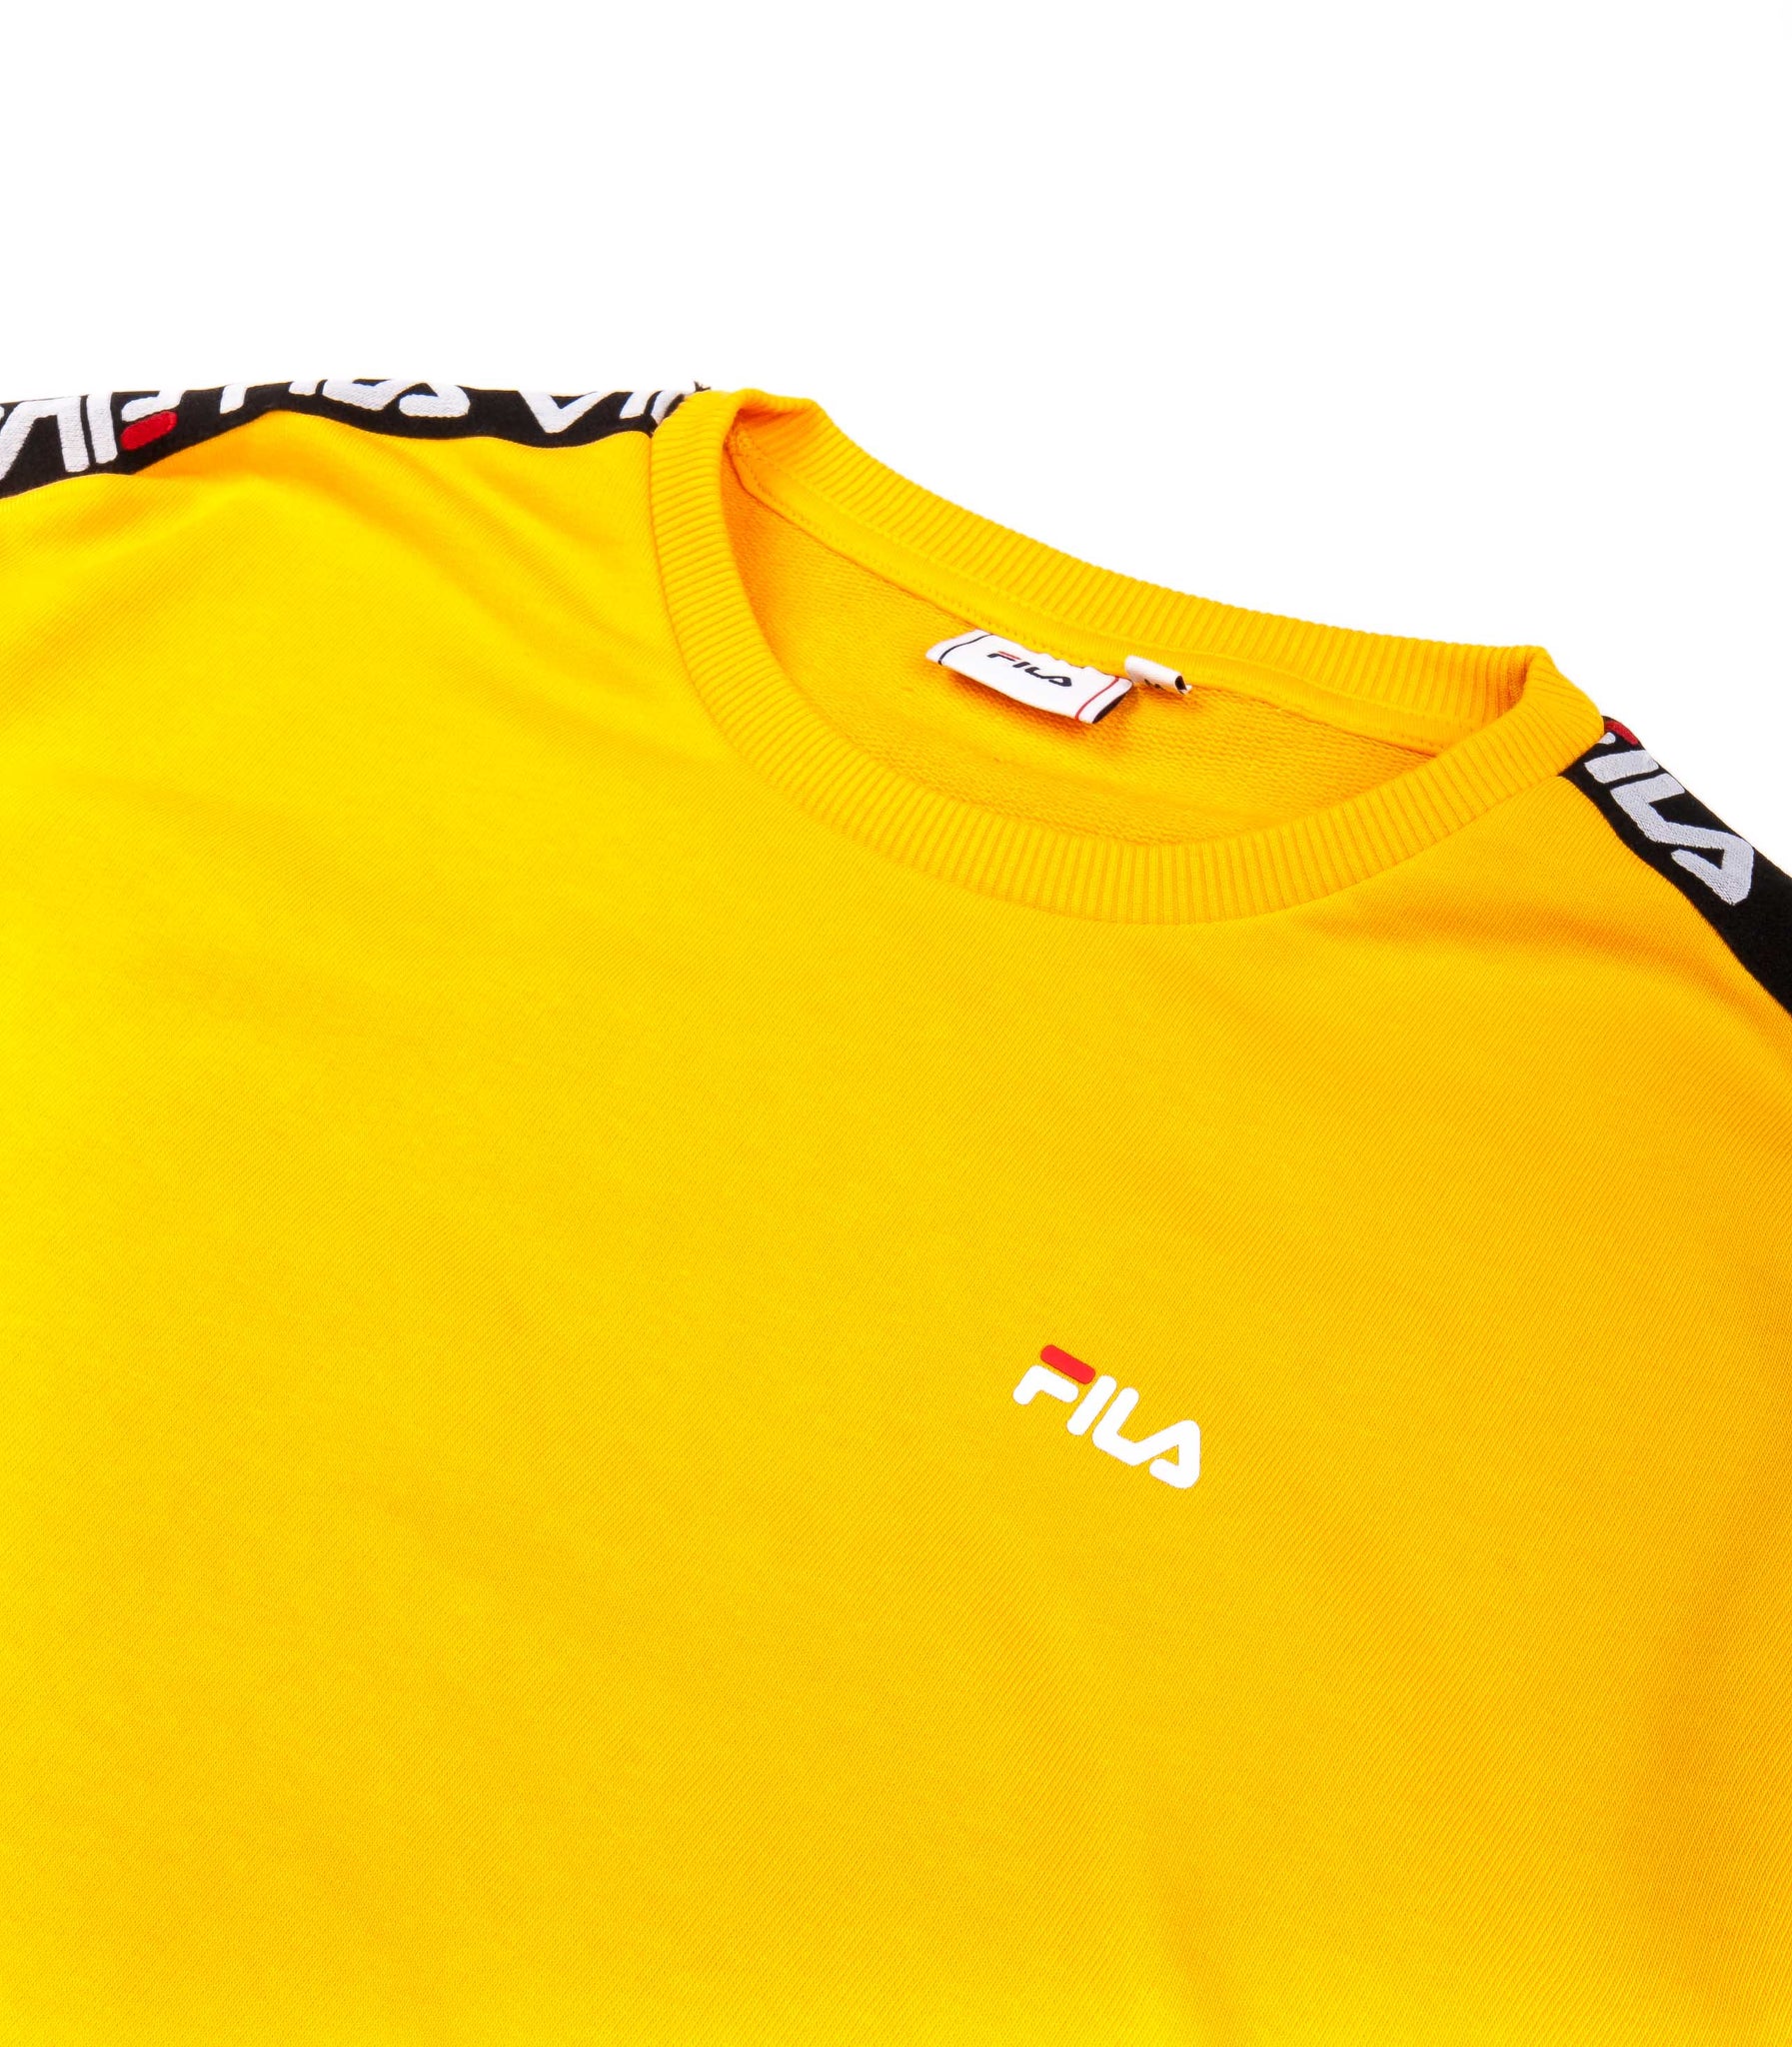 Fila Tivka Crew Shirt Yellow